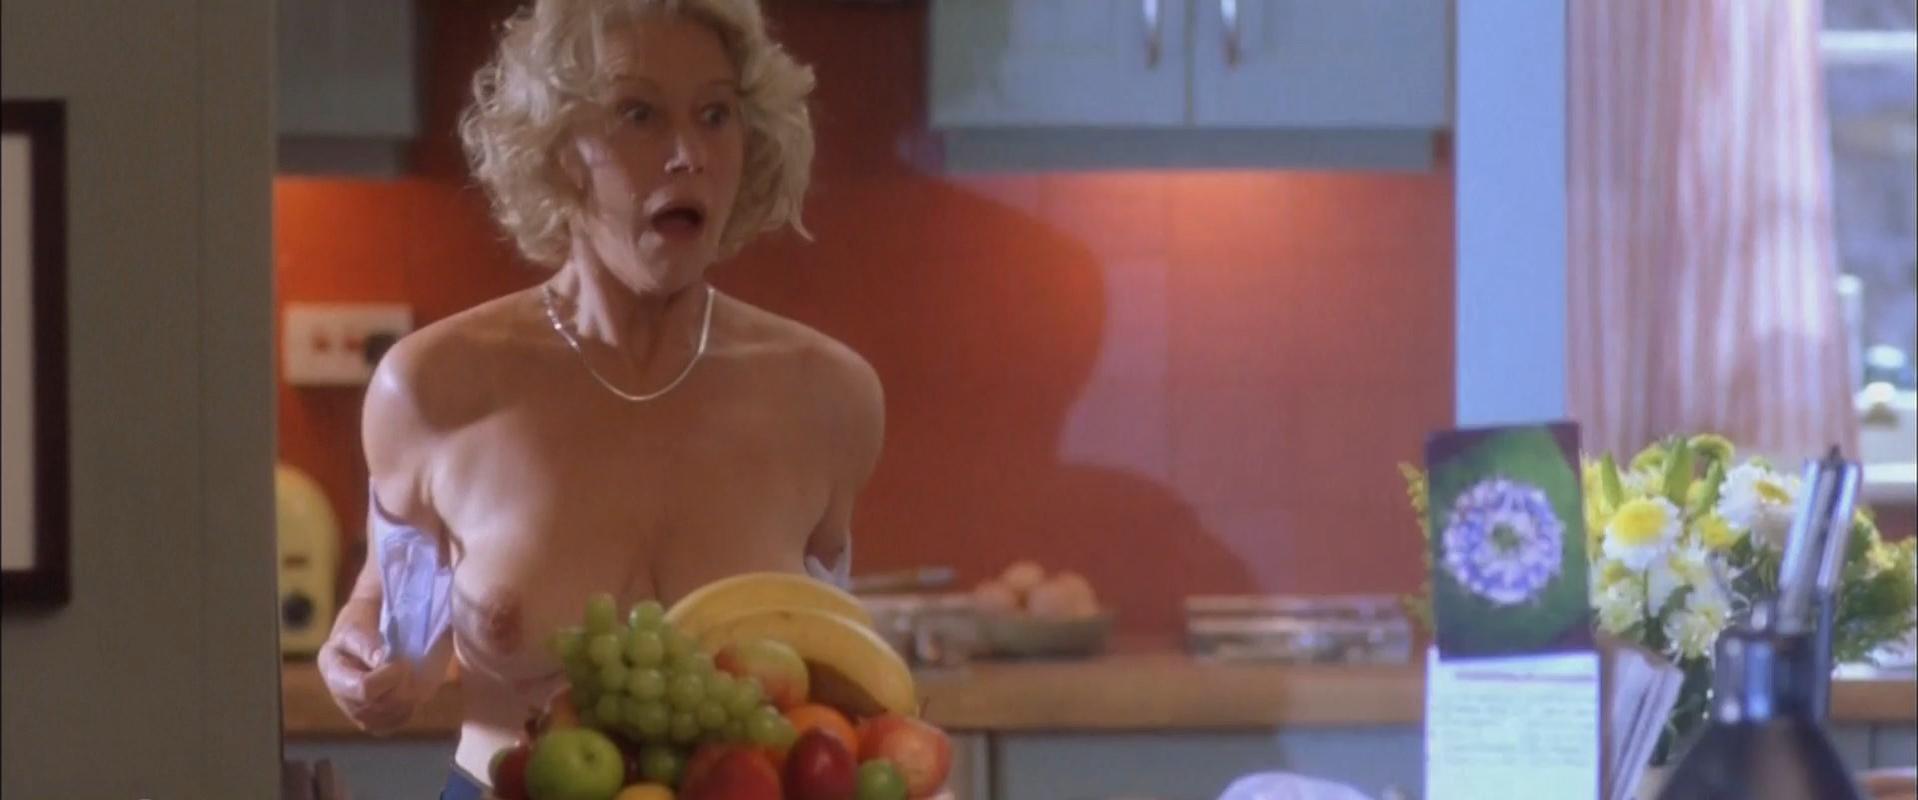 Nude video celebs » Actress » Julie Walters